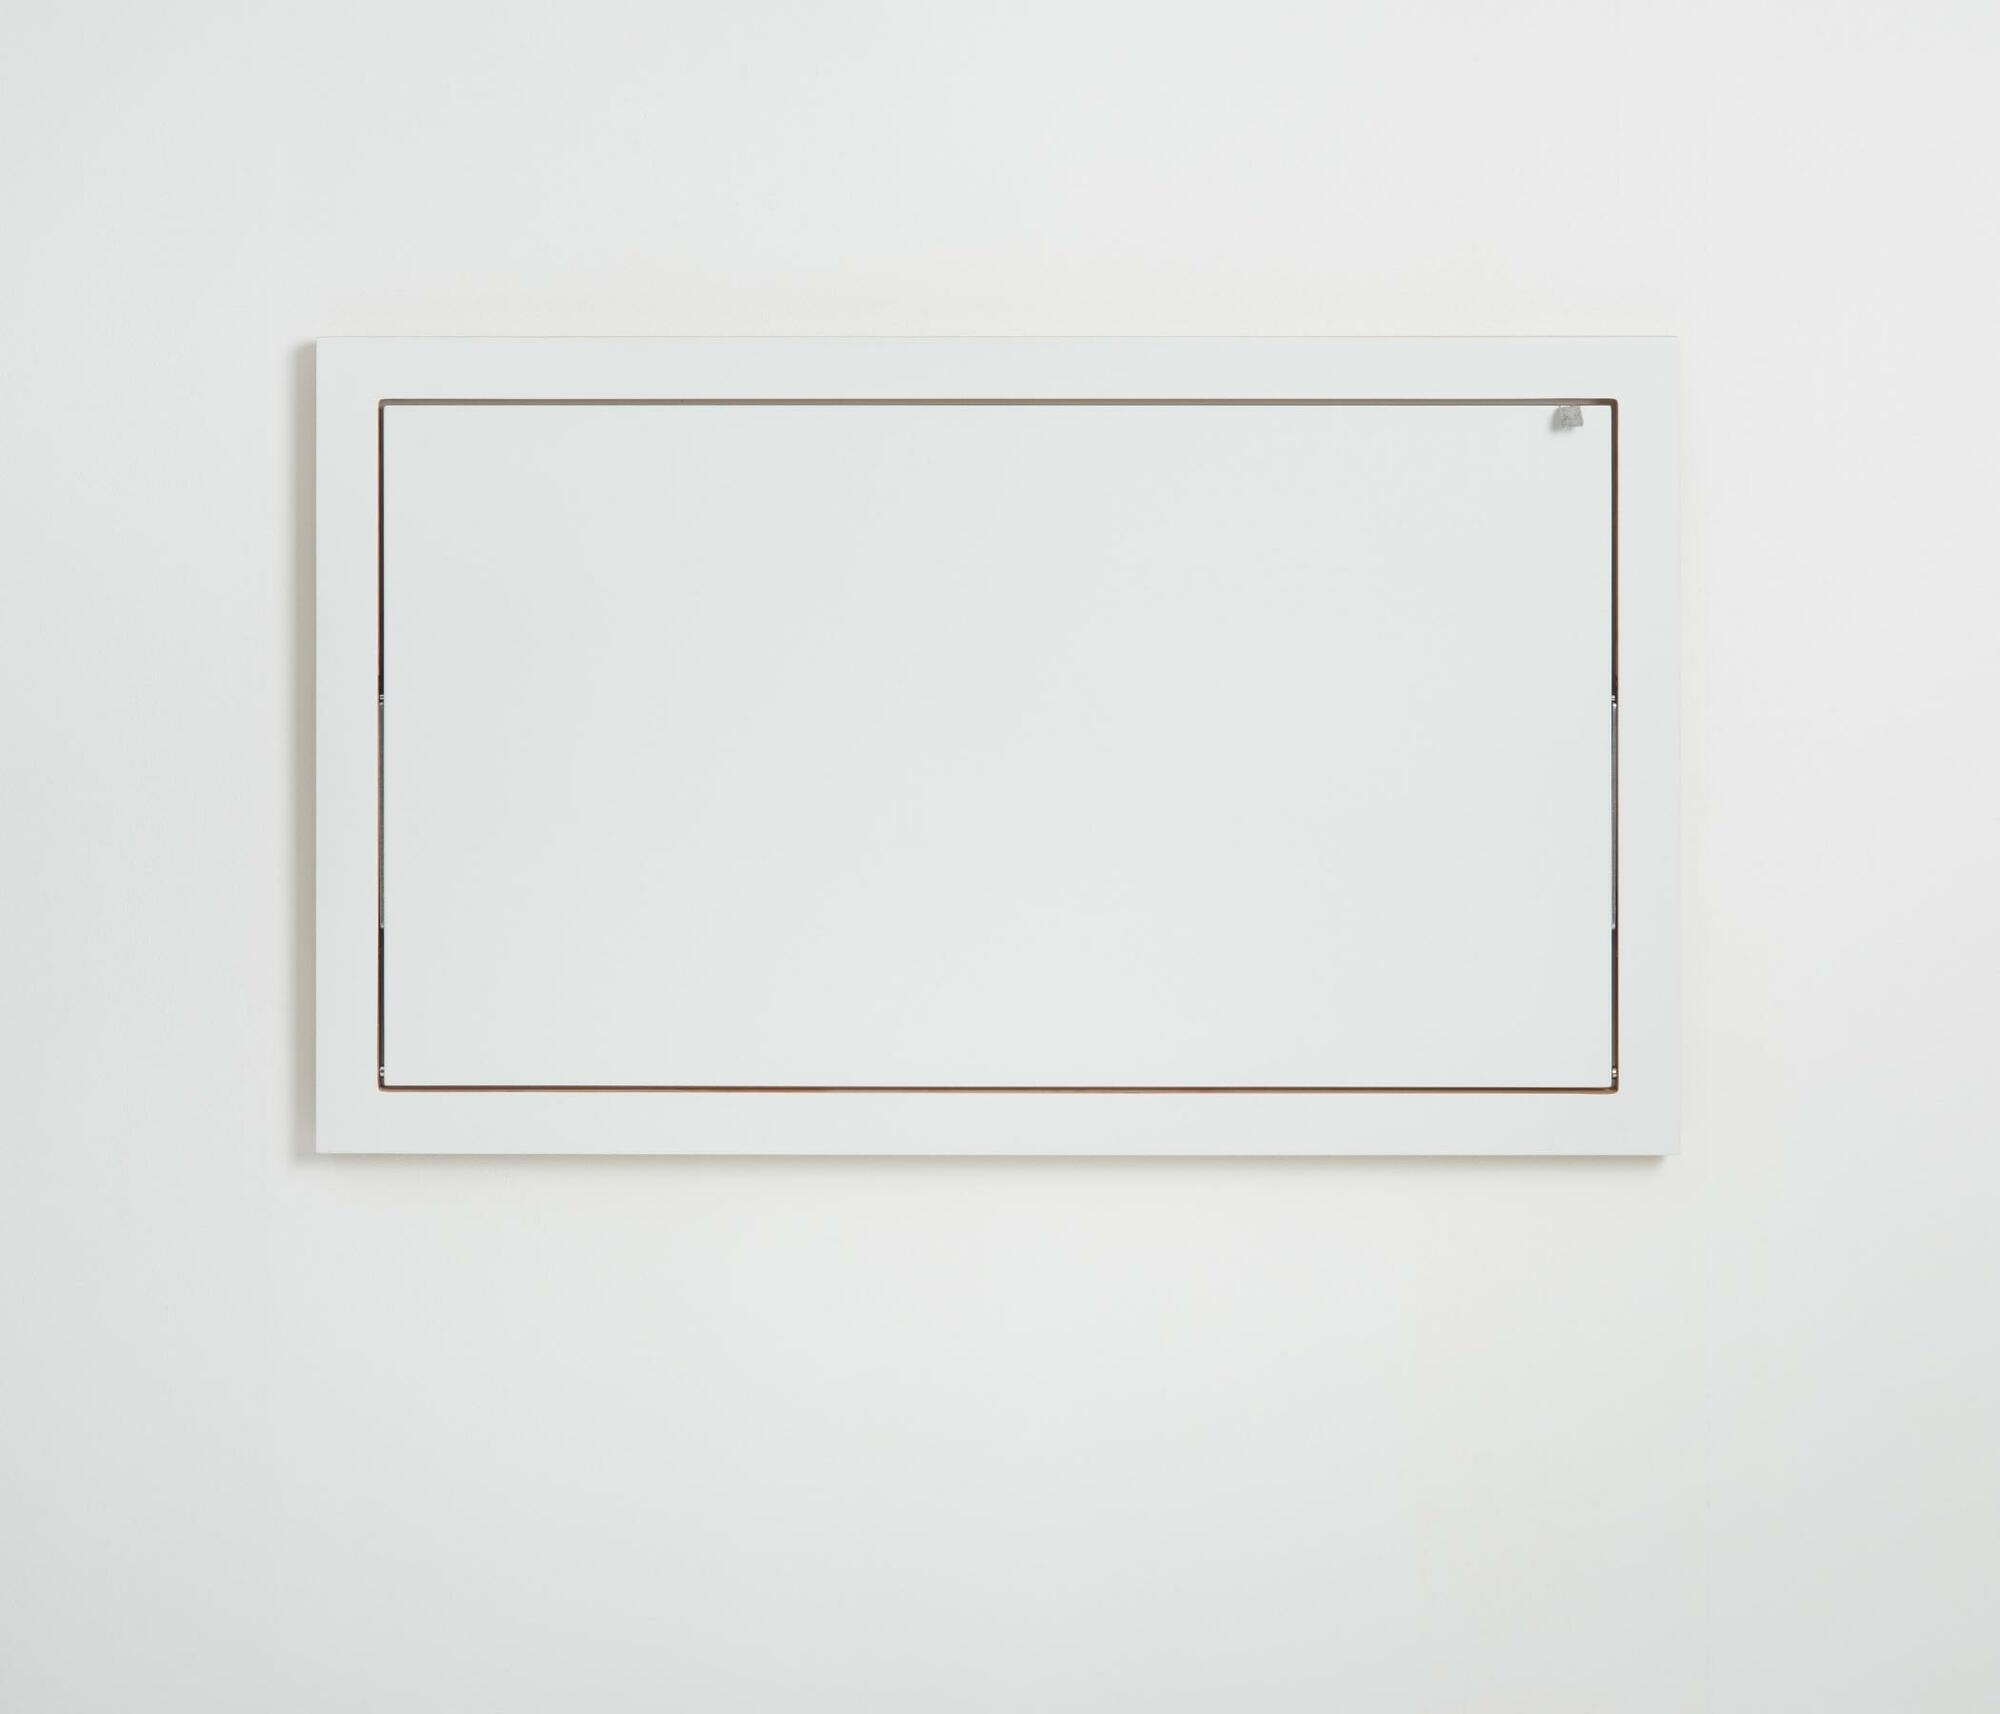 Fläpps Sekretär Holz Weiß 100 x 60 cm 2